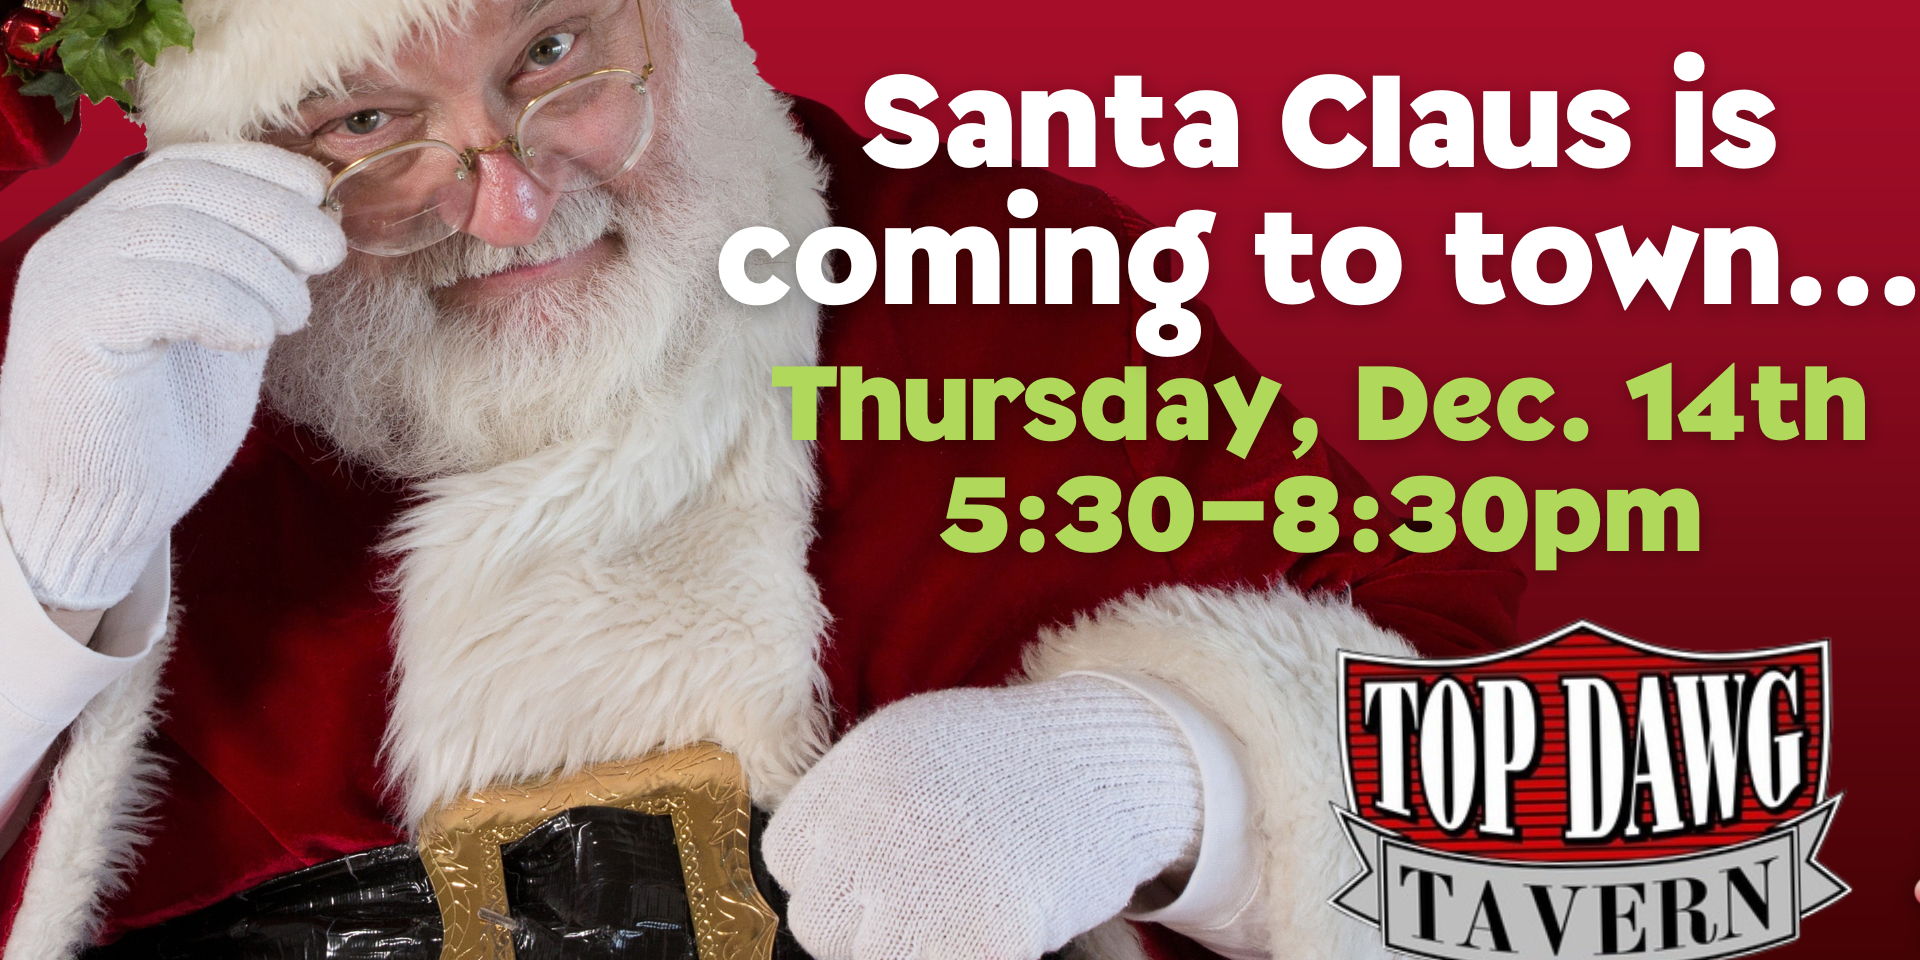 Santa Claus at Top Dawg Tavern promotional image